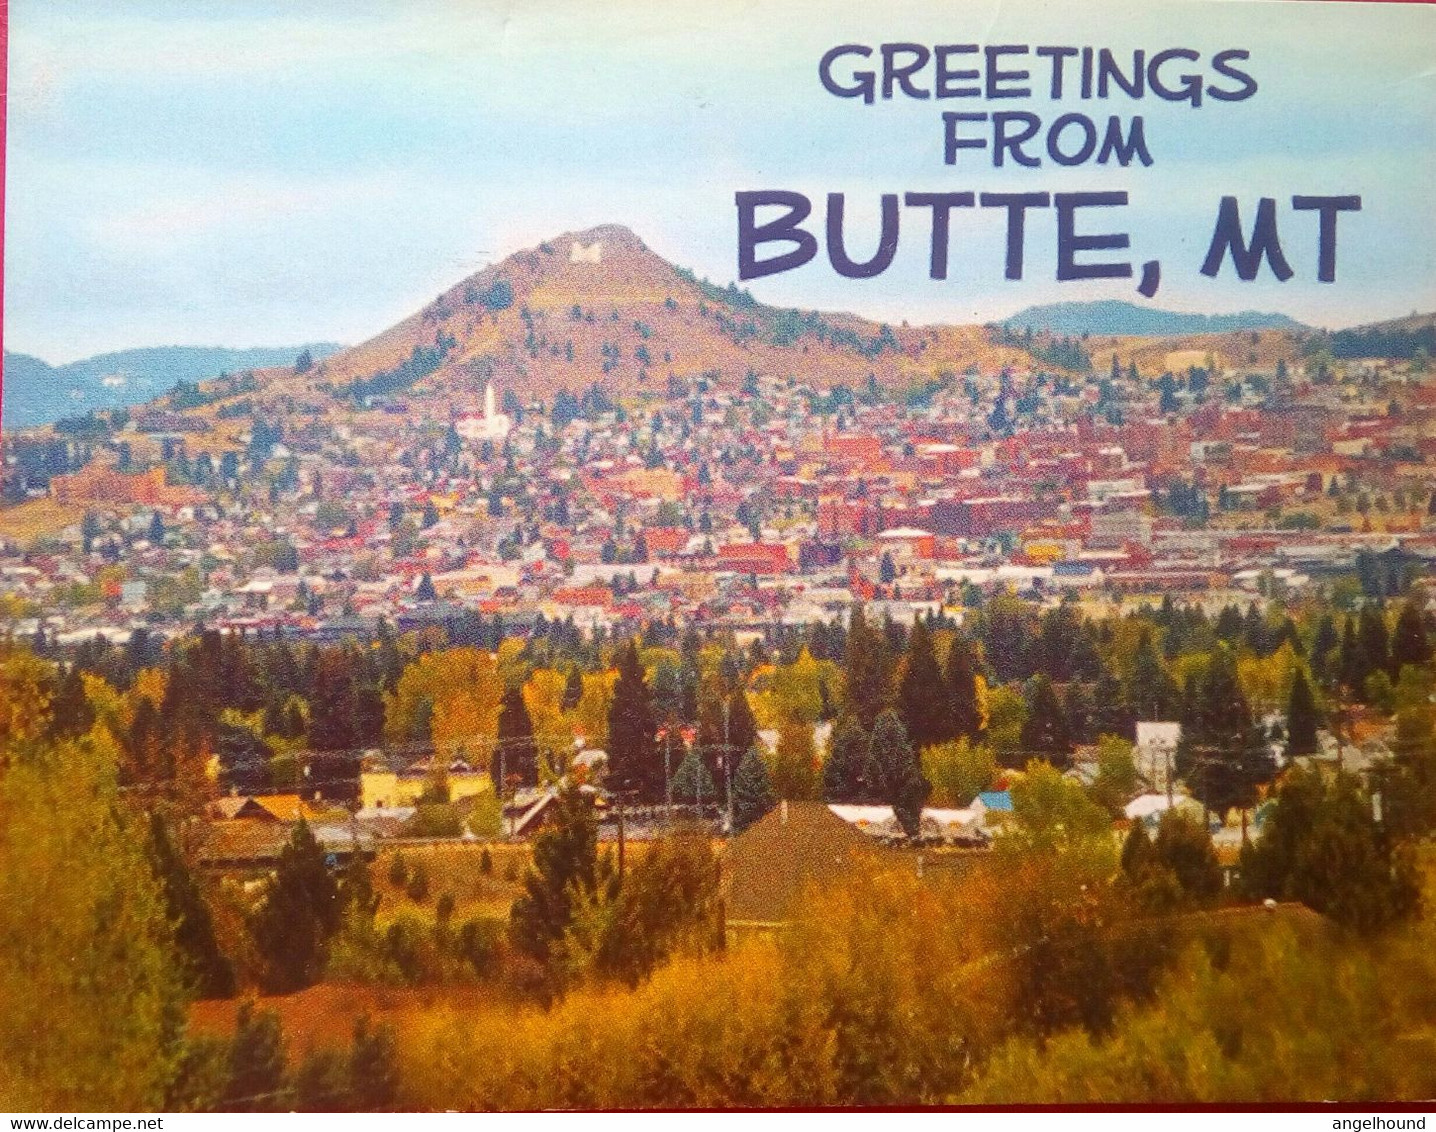 Butte, MT - Butte